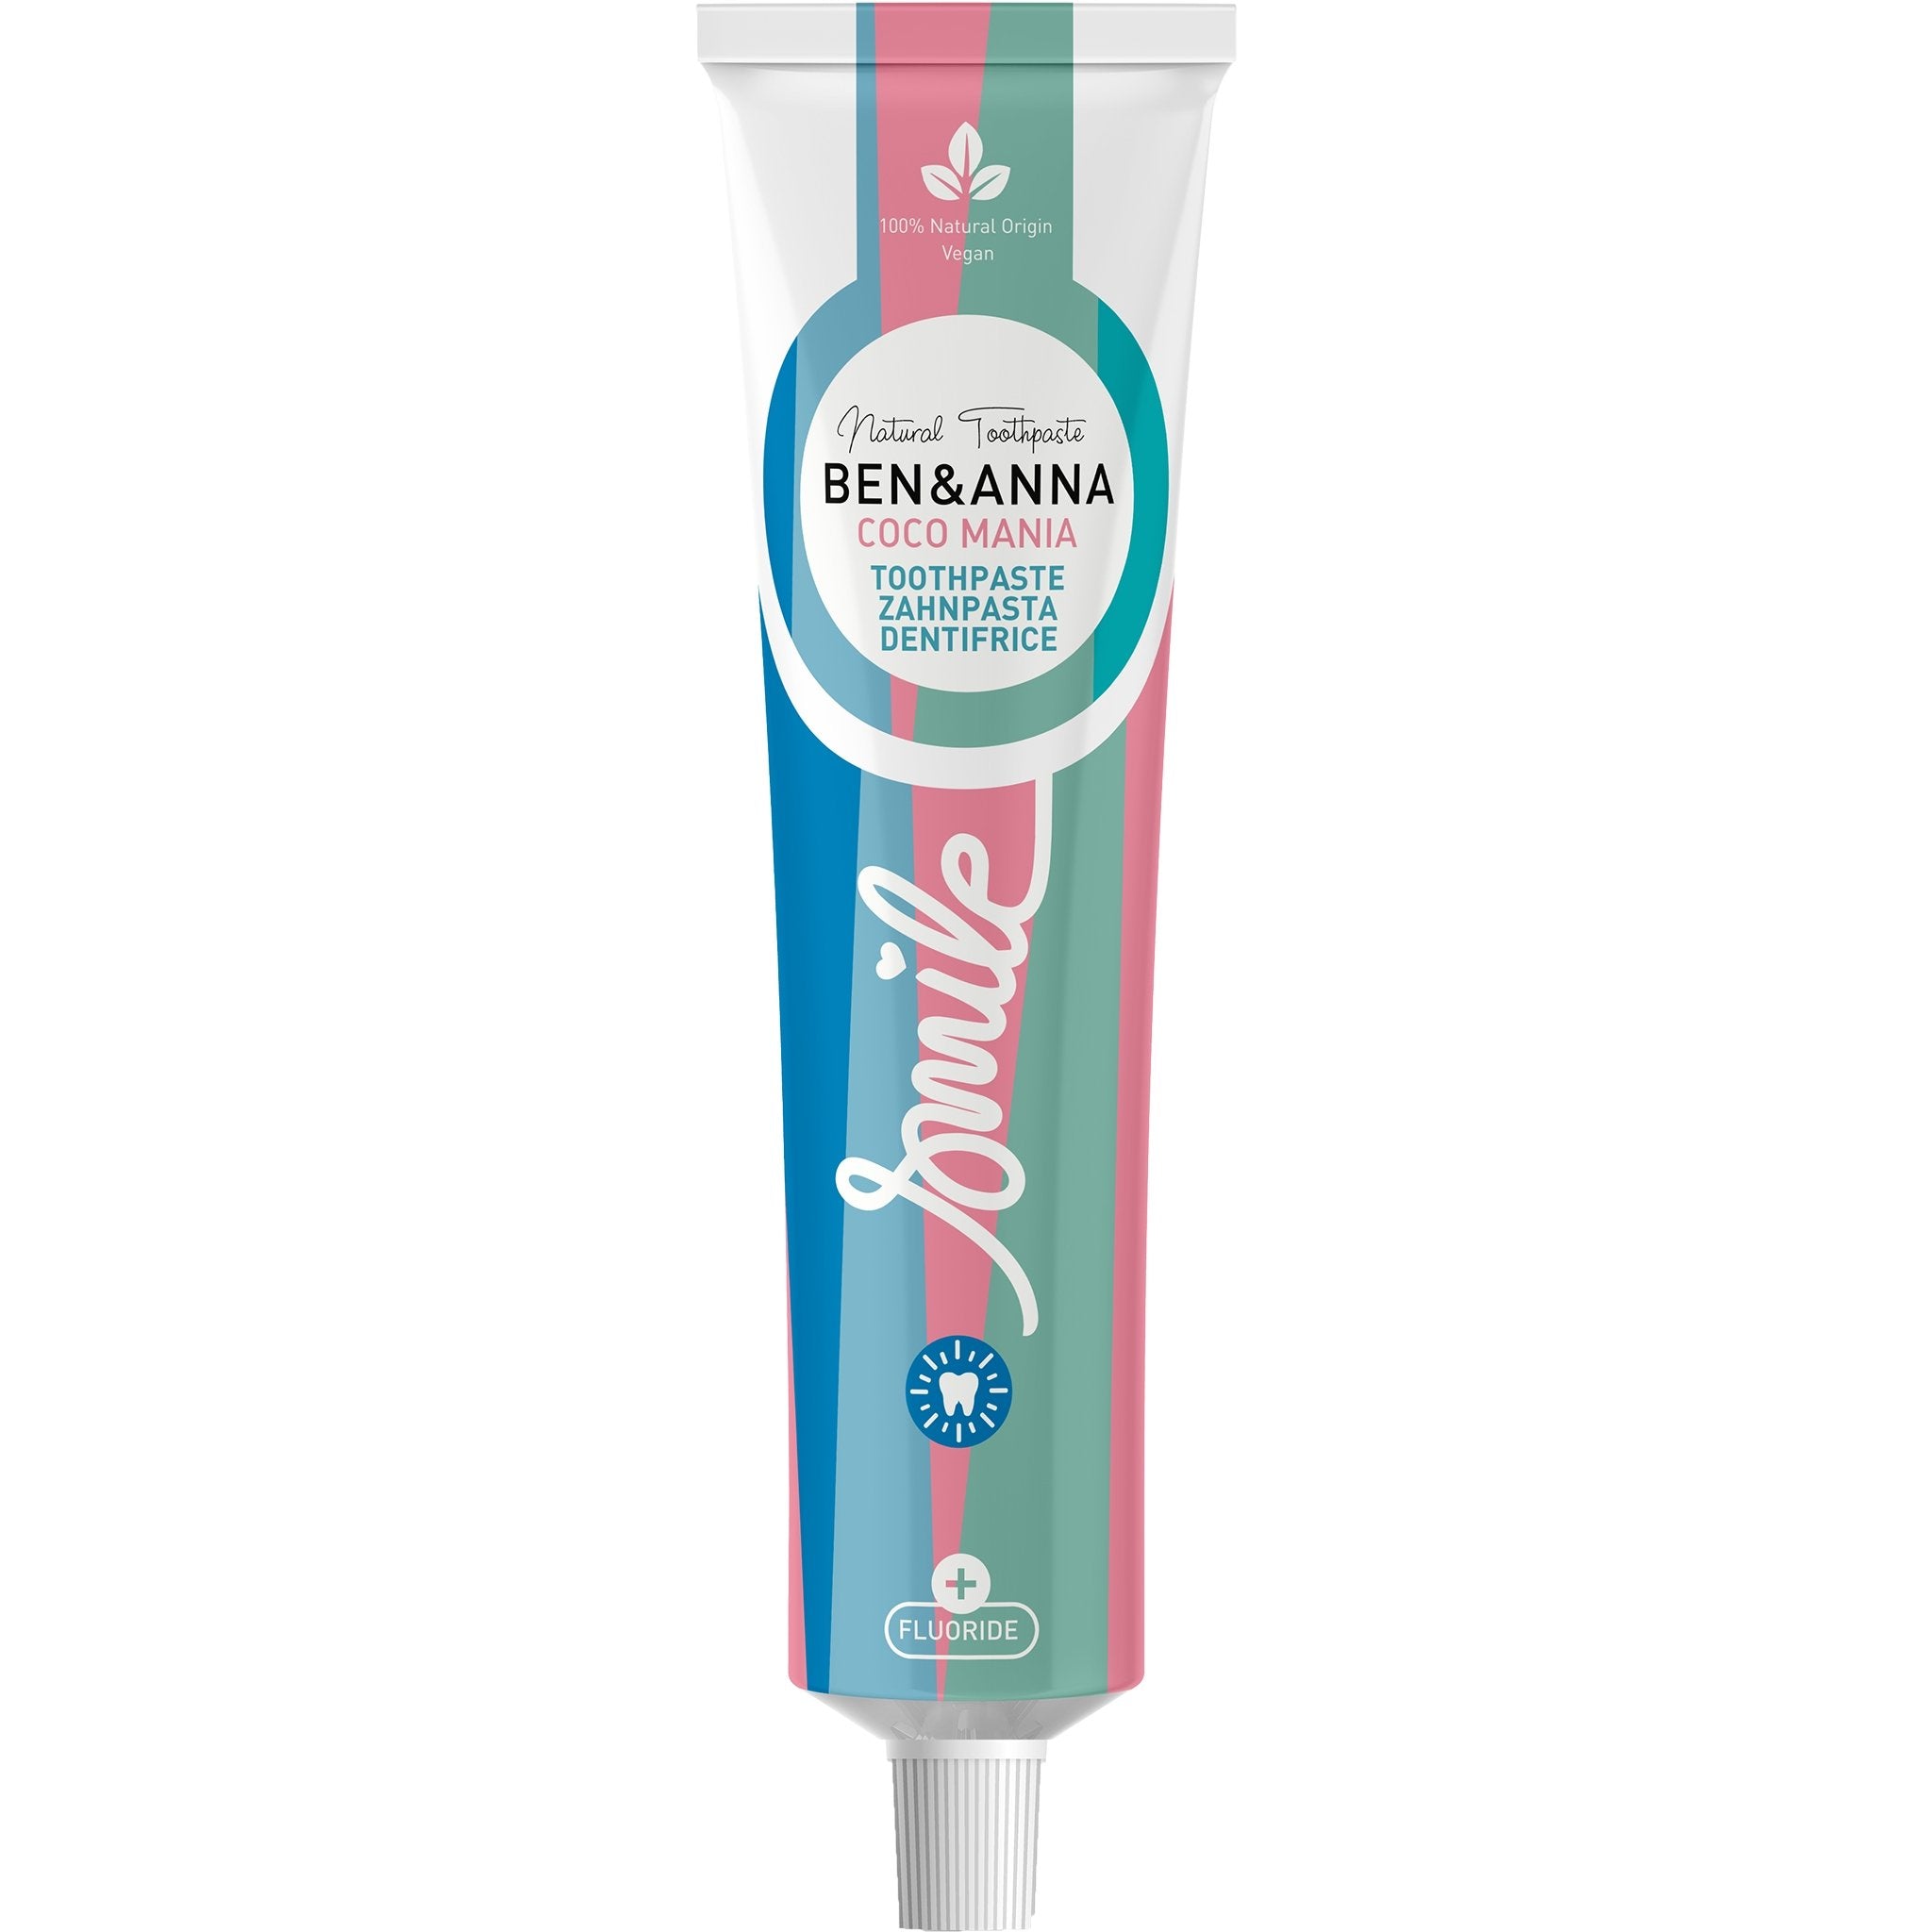 Toothpaste Tubes - Coco Mania Toothpaste - mypure.co.uk